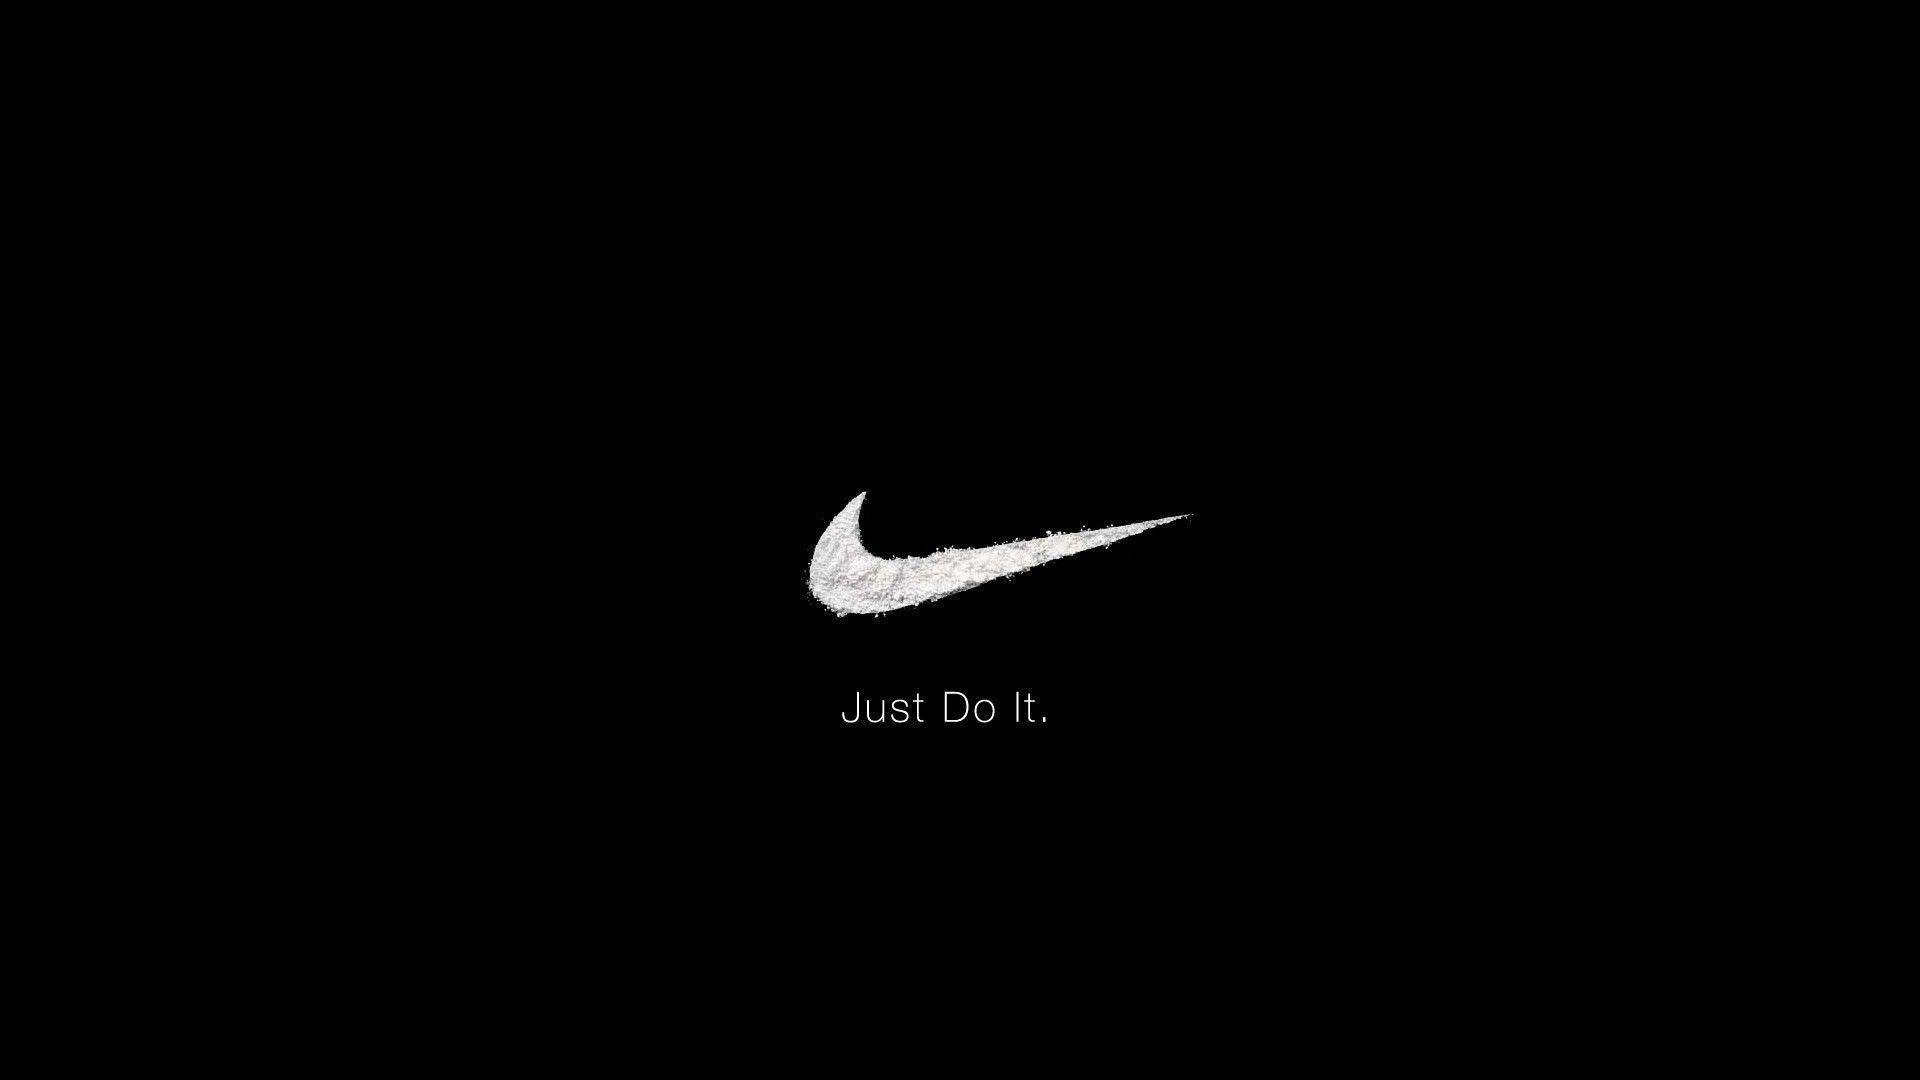 Cool Nike Logos Image Is 4K Wallpaper. Walle, Fondos de pantalla